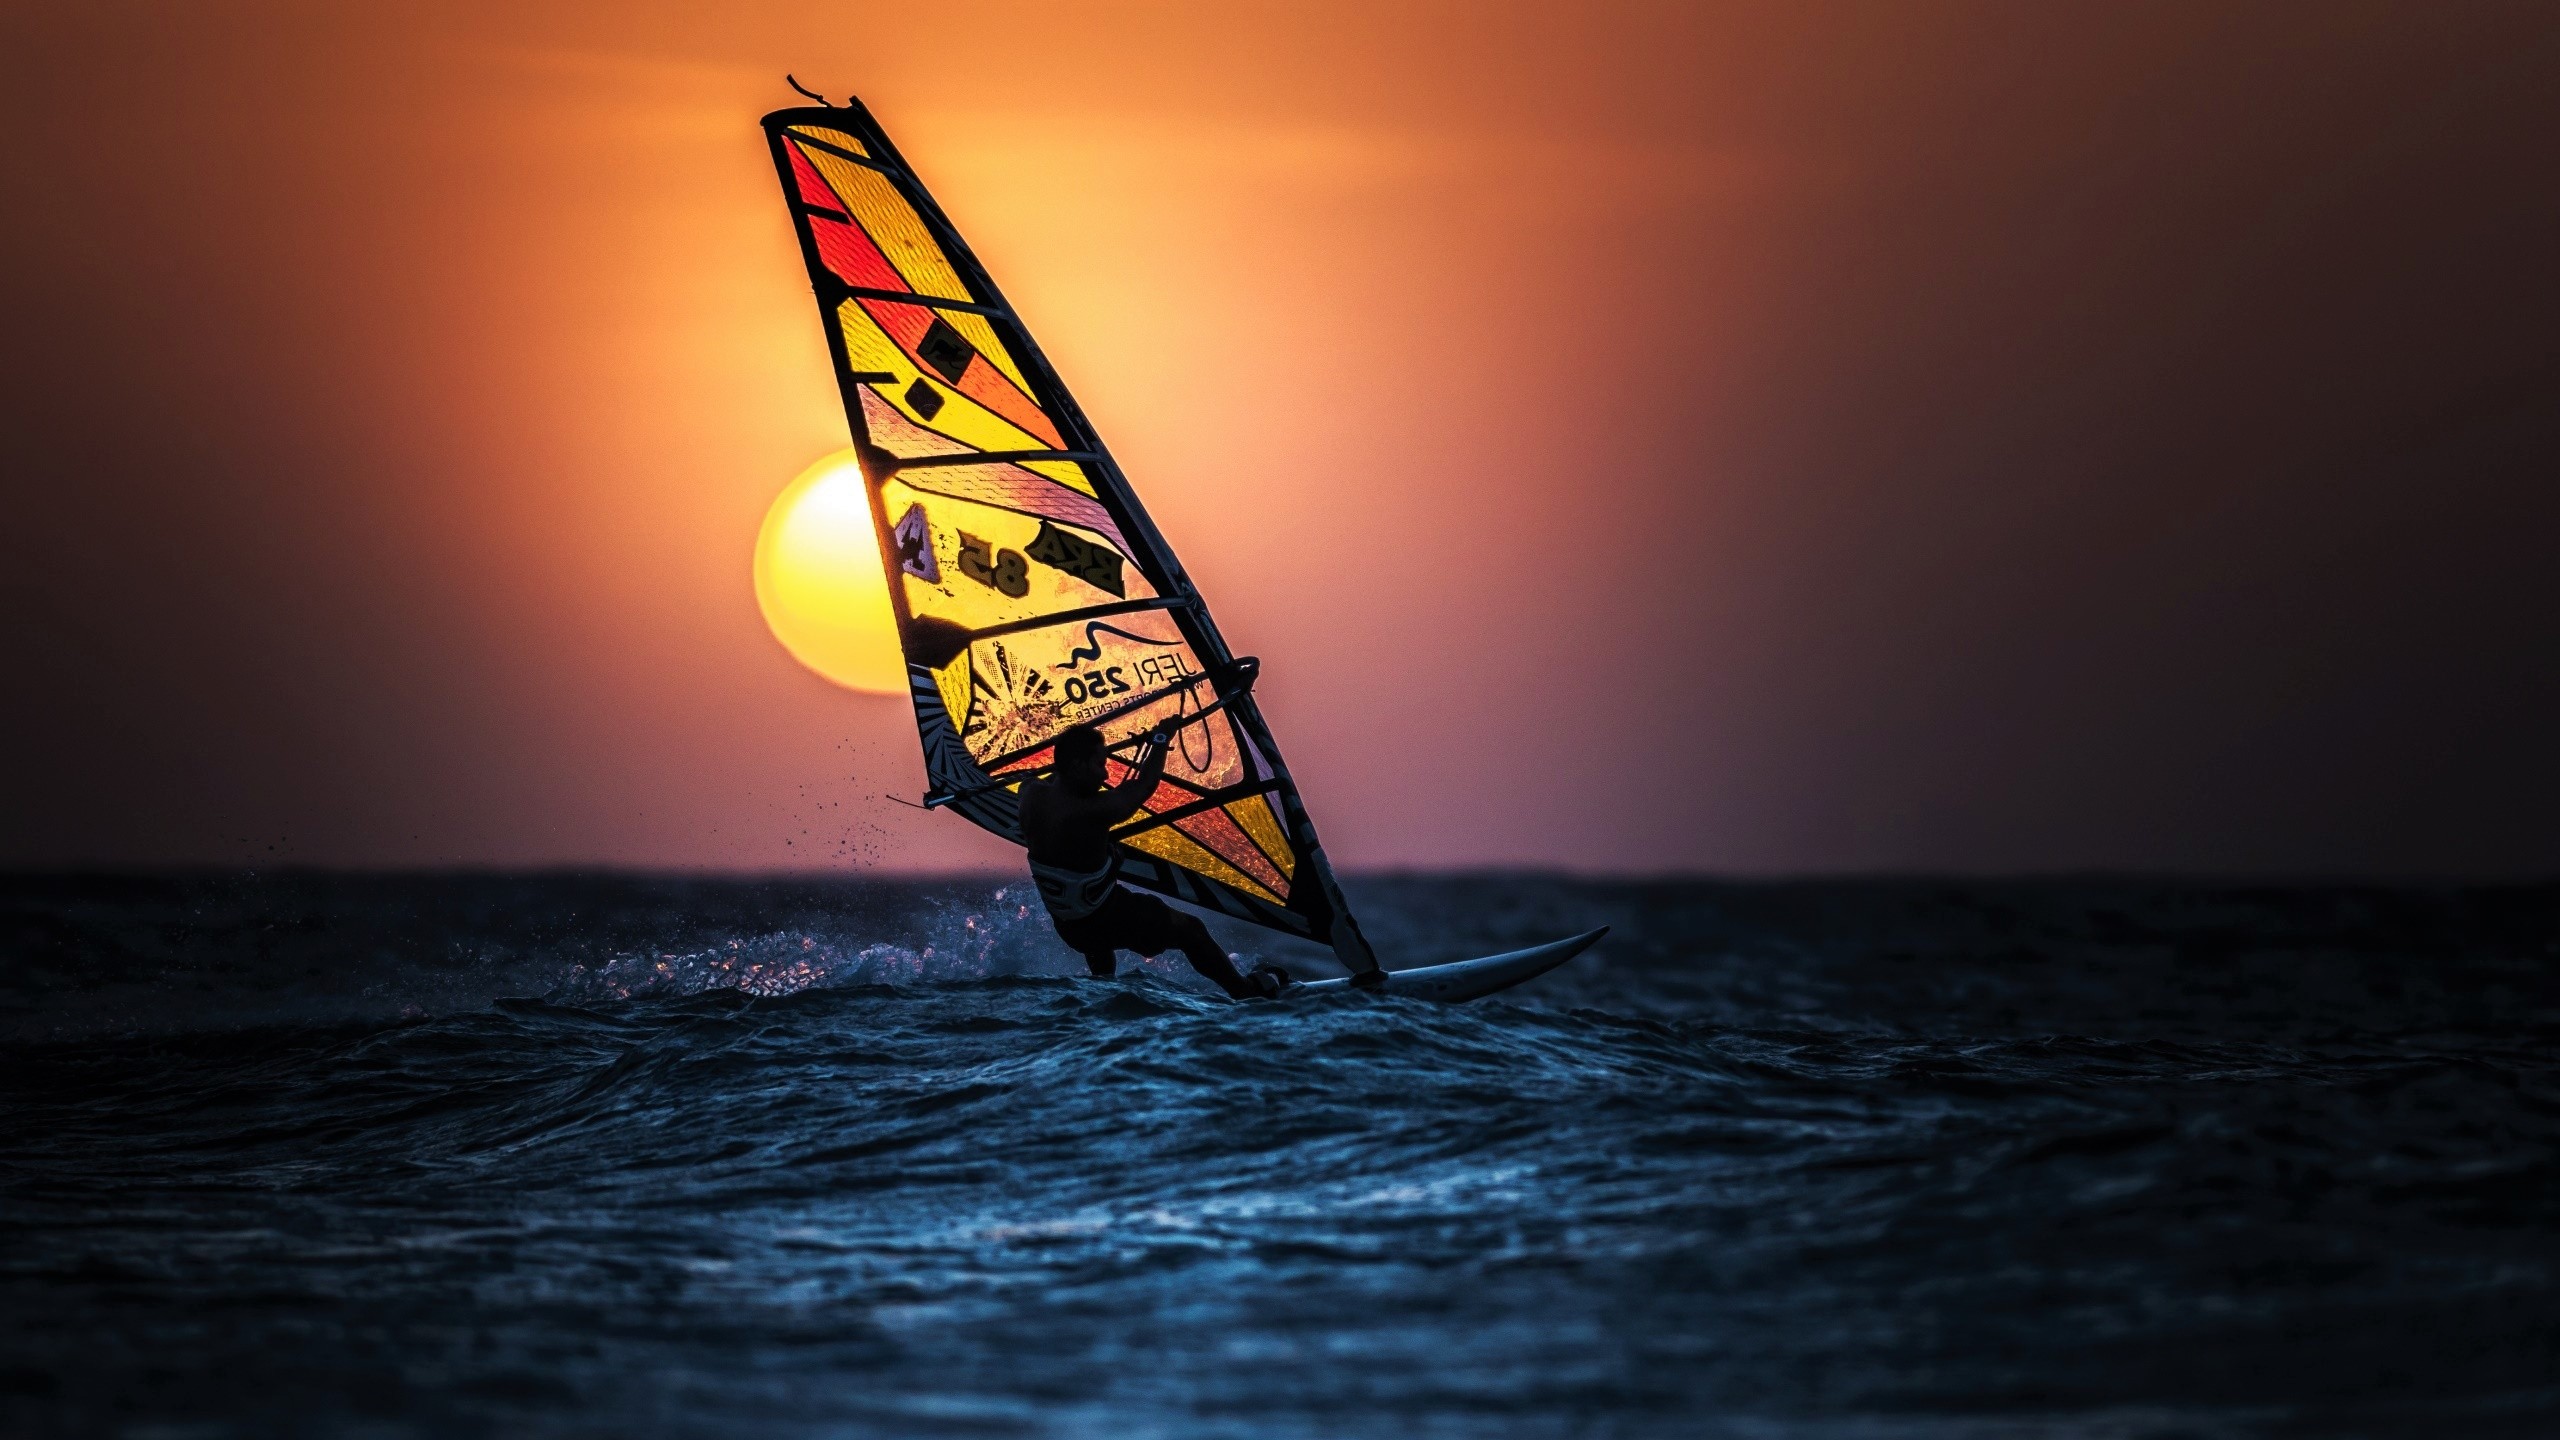 Ocean Sea Sport Sunset Windsurfing 2560x1440